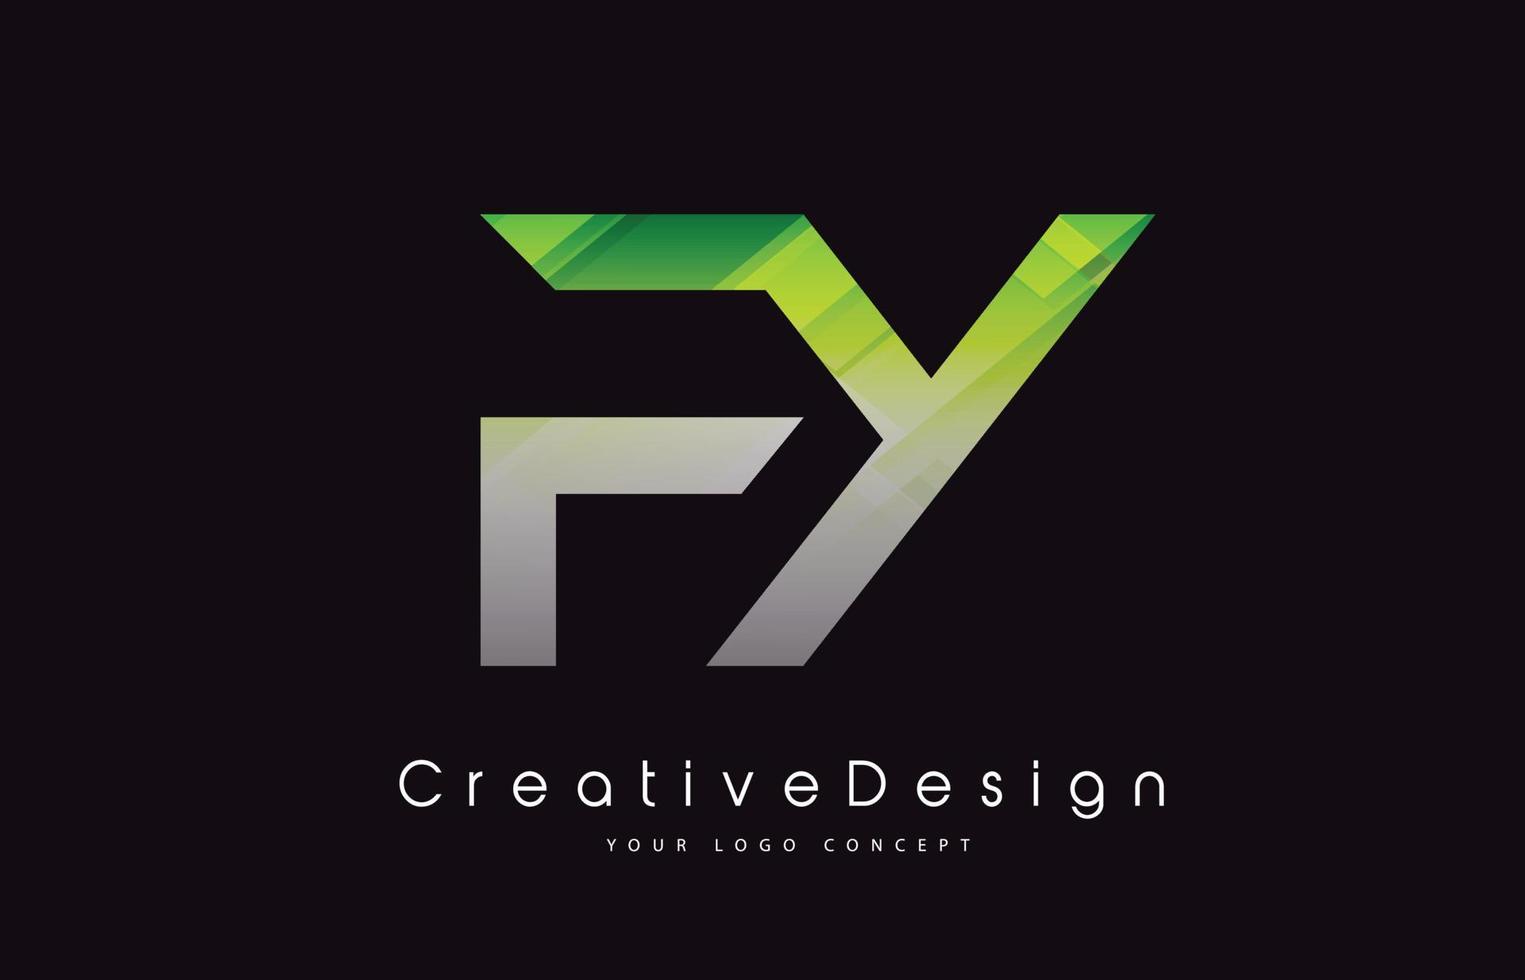 fy brief logo ontwerp. groene textuur creatieve pictogram moderne brieven vector logo.